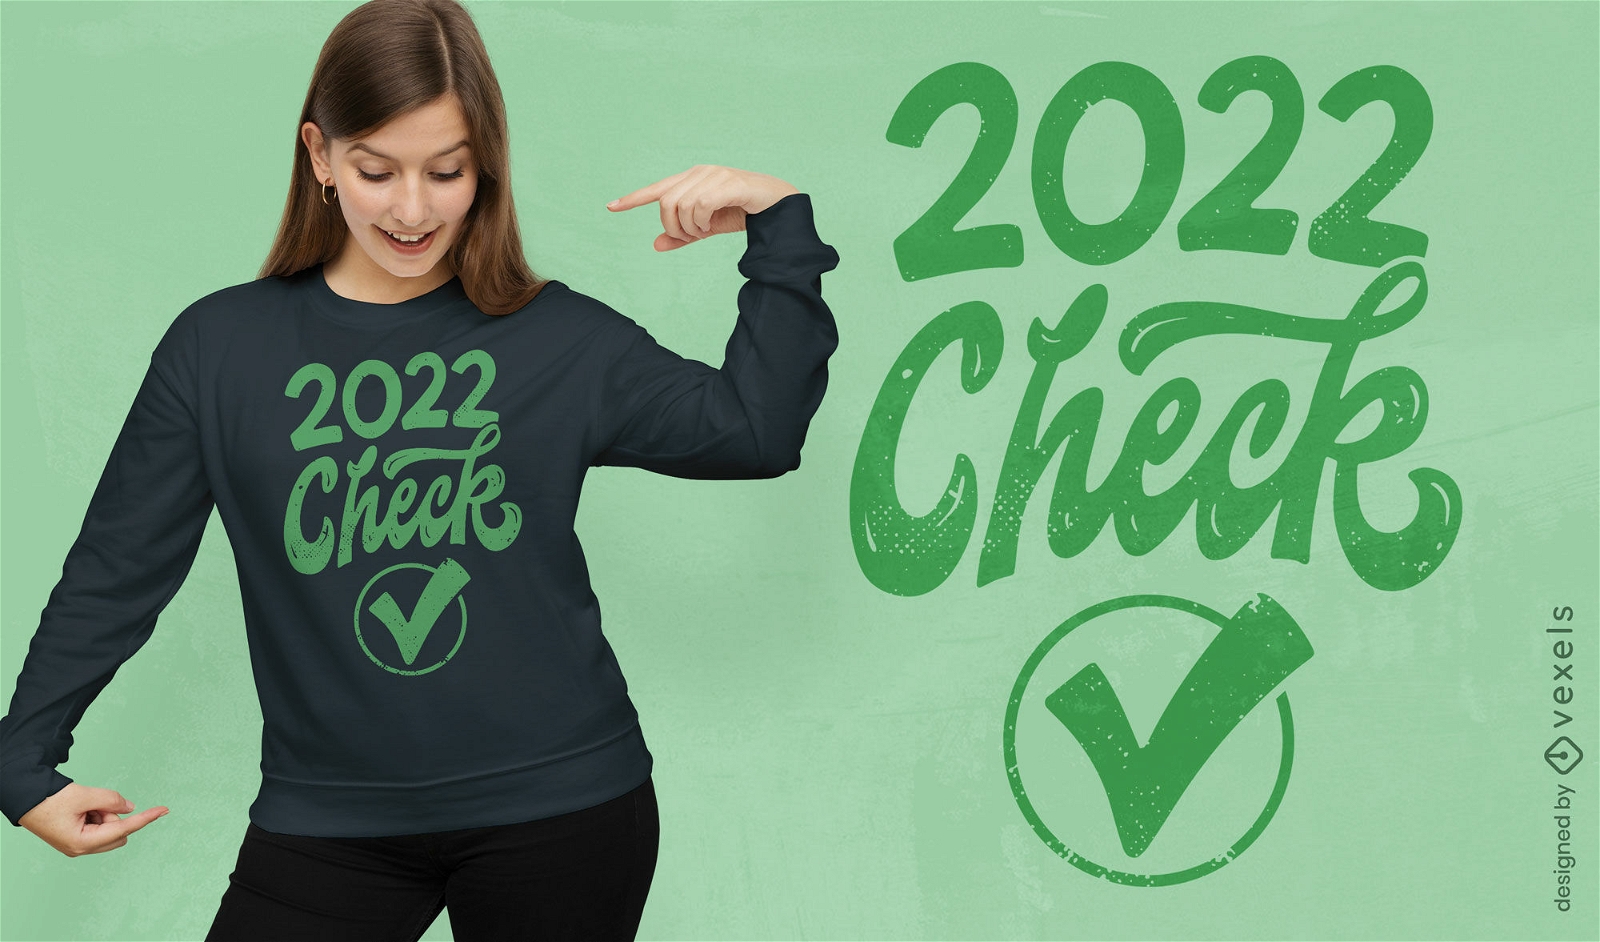 2022 new year holiday check t-shirt design